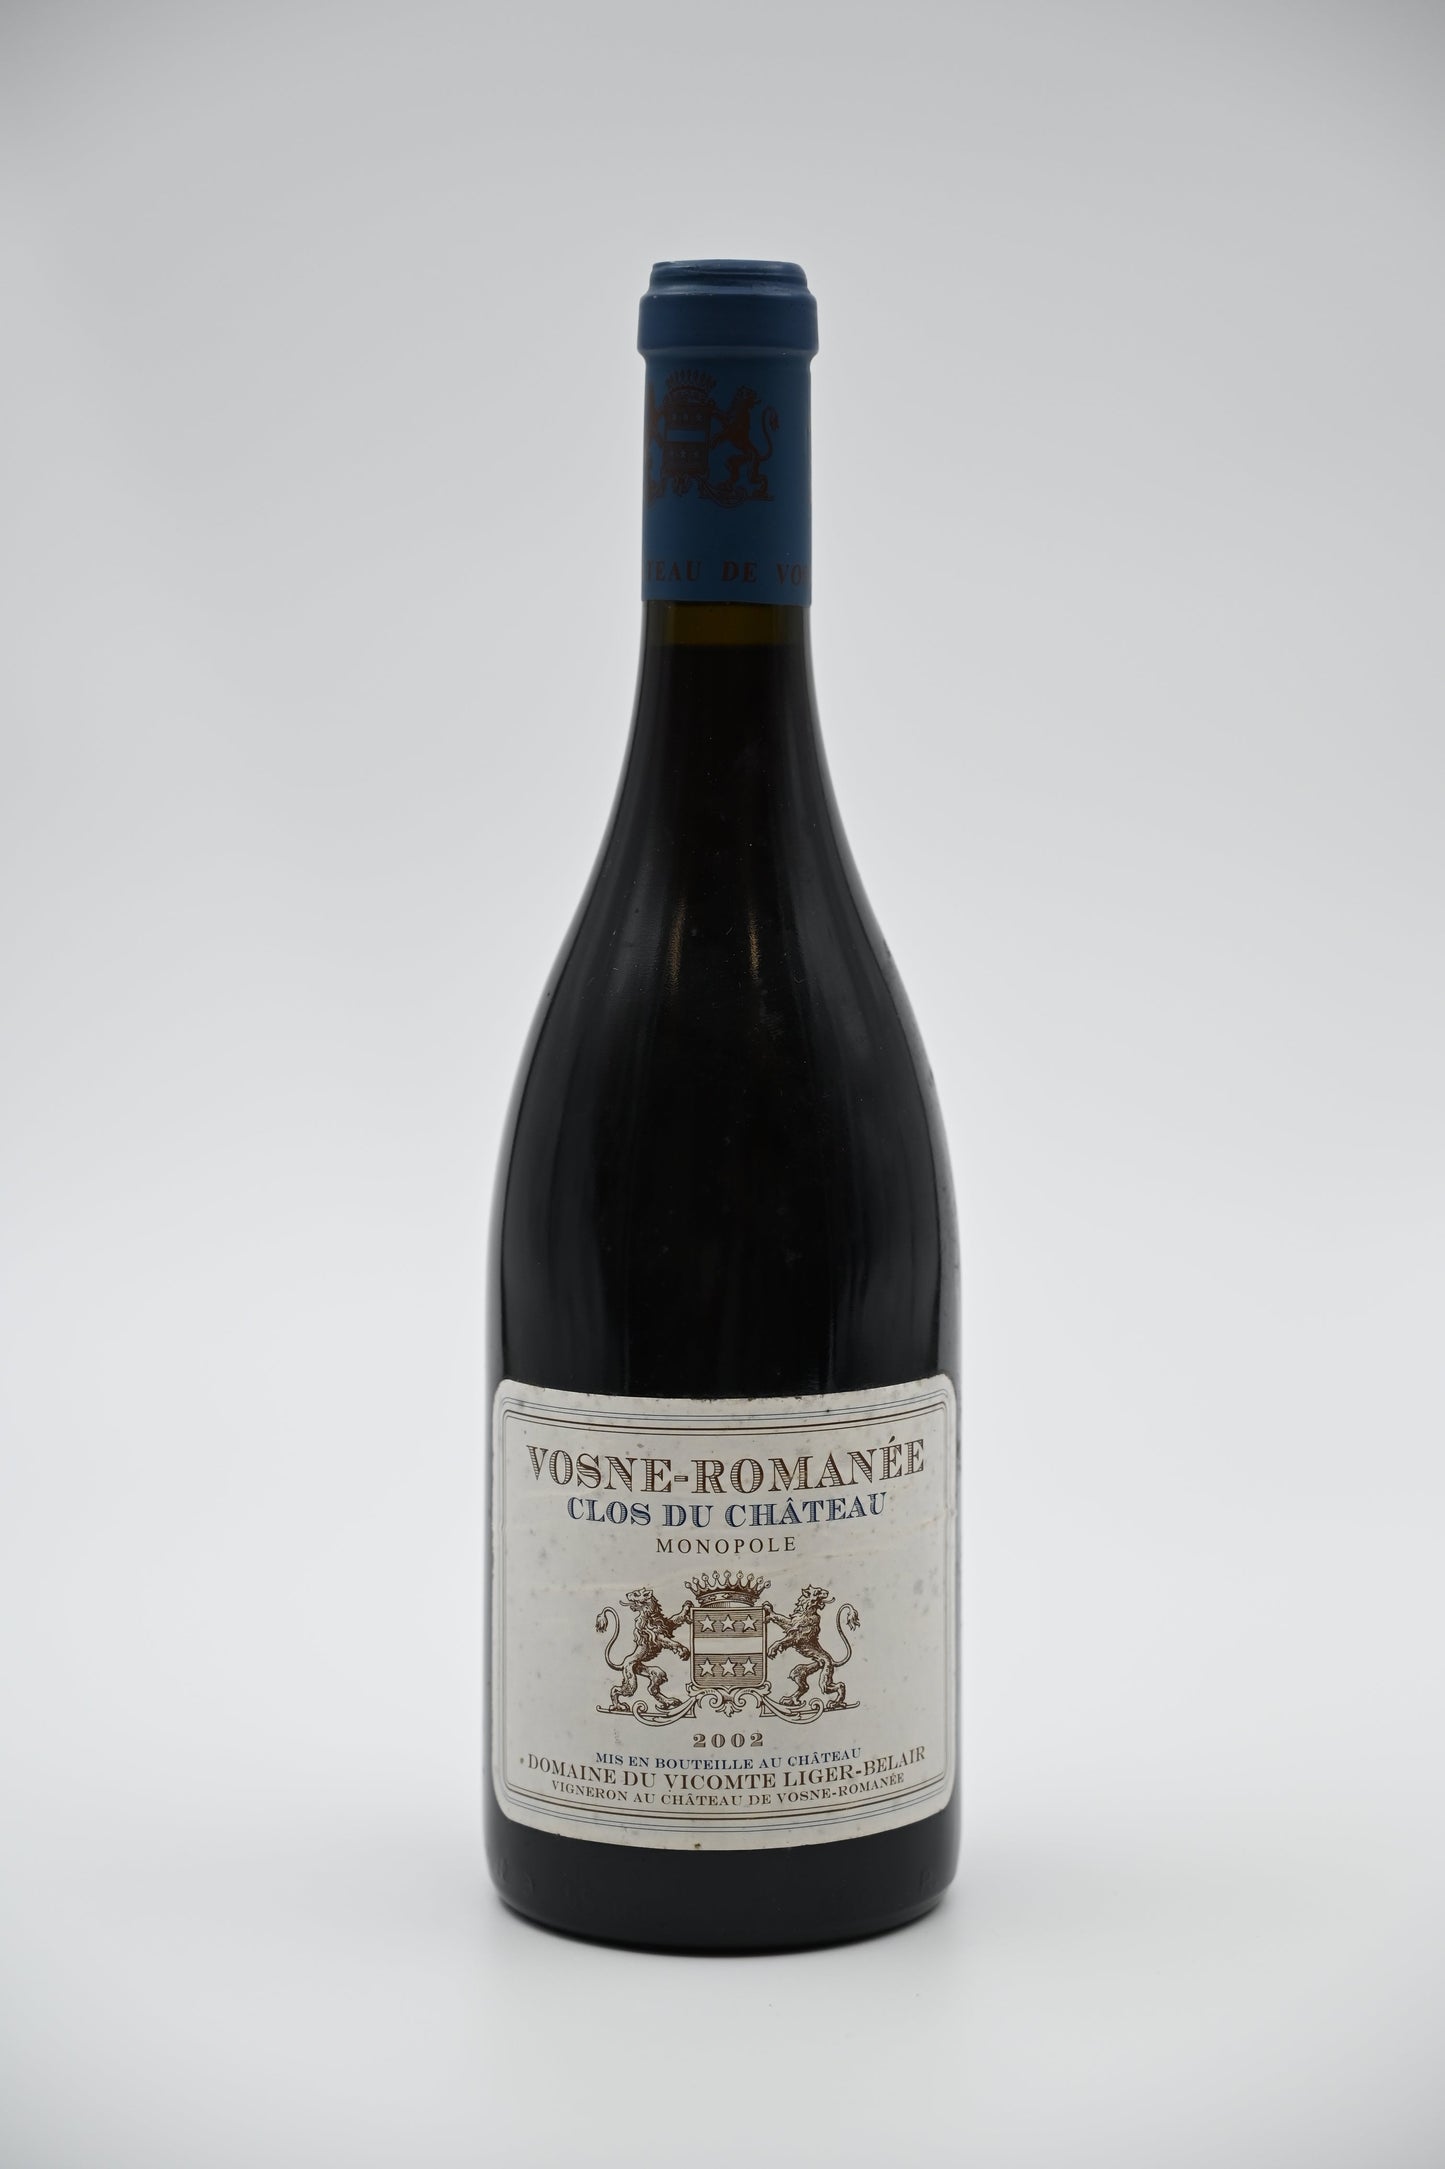 2002 Comte Liger Belair, Vosne Romanee Clos du Chateau 里贝伯爵酒庄城堡园 沃恩罗曼尼村 红葡萄酒 李白